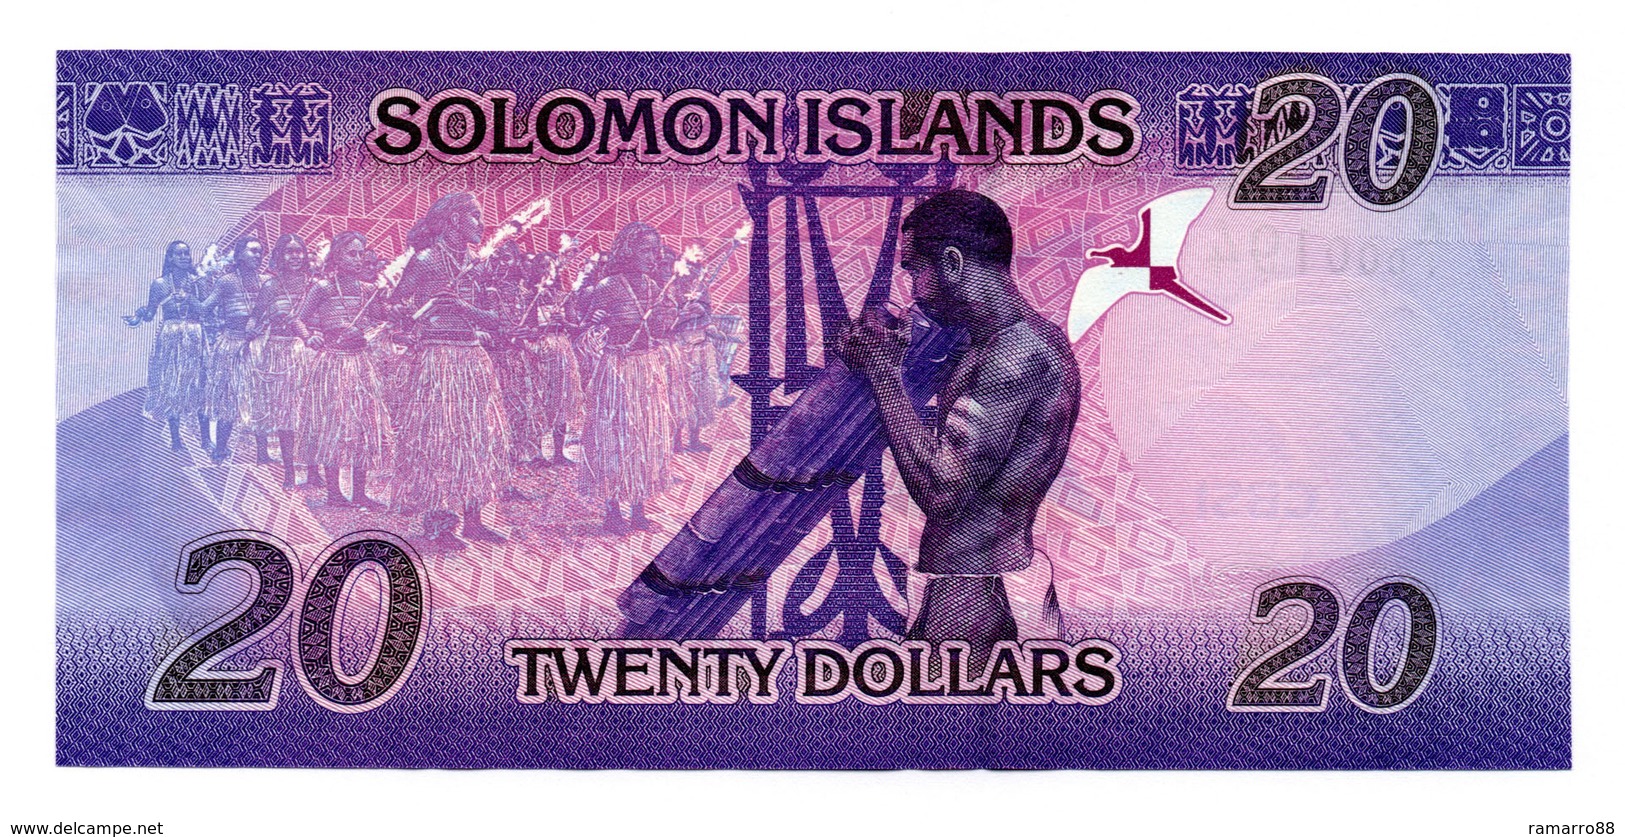 Solomon Islands 20 Dollars 2017 Pick # 34 Very Low Serial # A/1 000194 Unc - Salomonseilanden